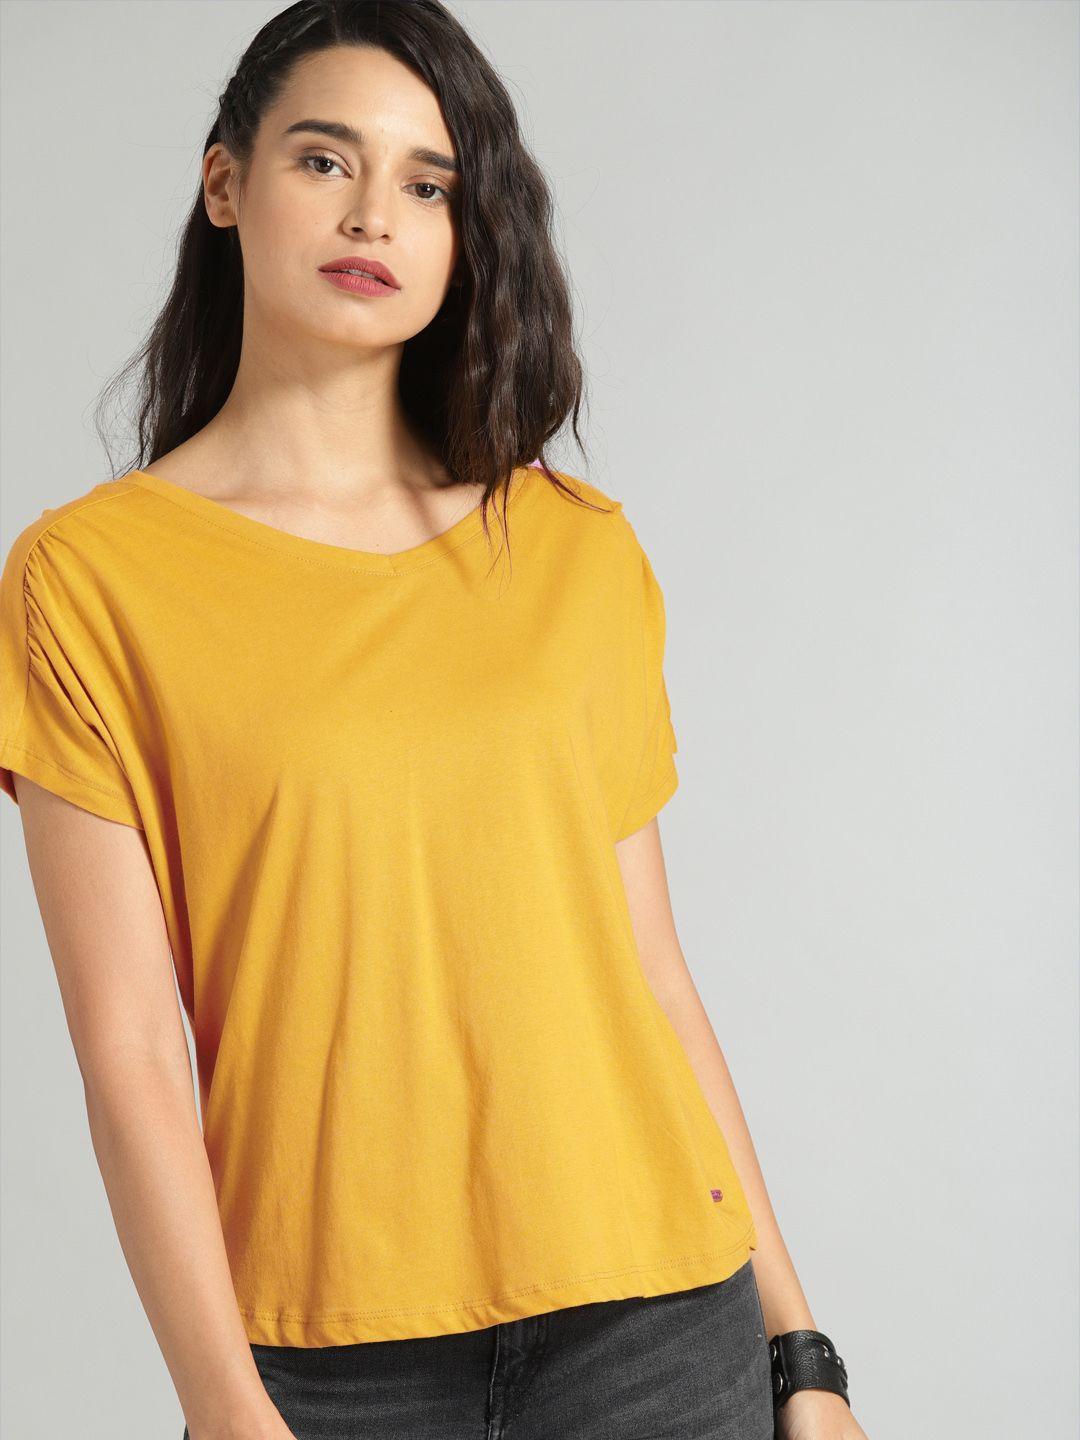 roadster-women-mustard-yellow-cotton-pure-cotton-t-shirt